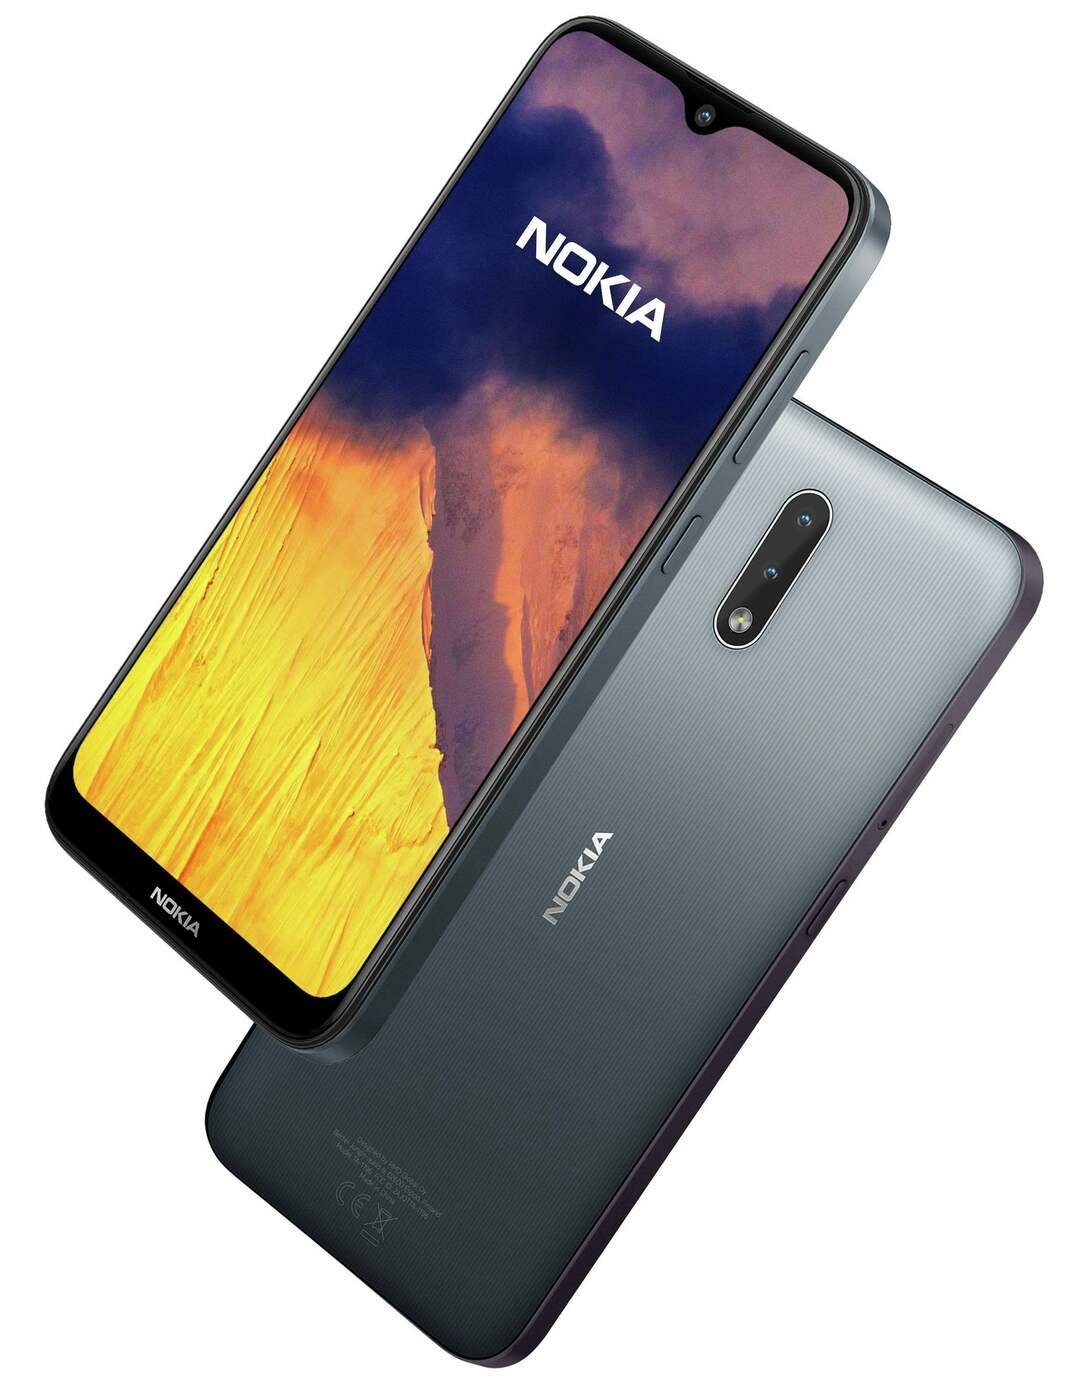 SIM Free Nokia 2.3 32GB  Mobile Phone Review